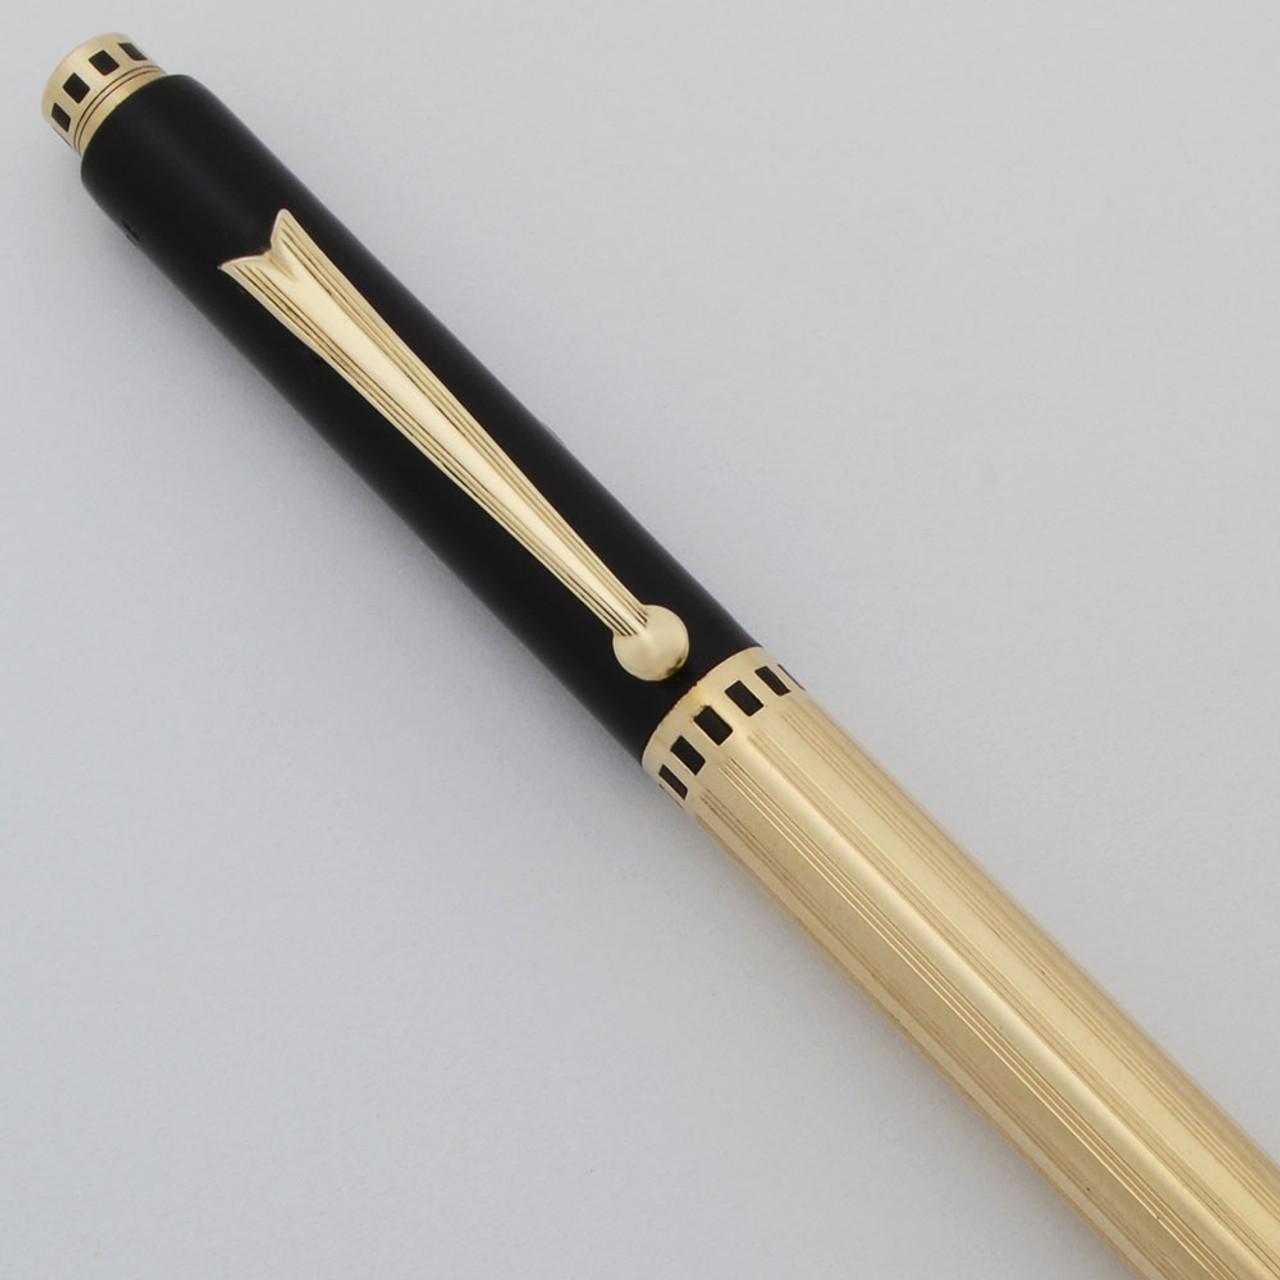 Wahl Eversharp Coronet Mechanical Pencil - #3014-SC Gold Barrel, Black Cap, 1.1mm Leads (Excellent, Works Well)